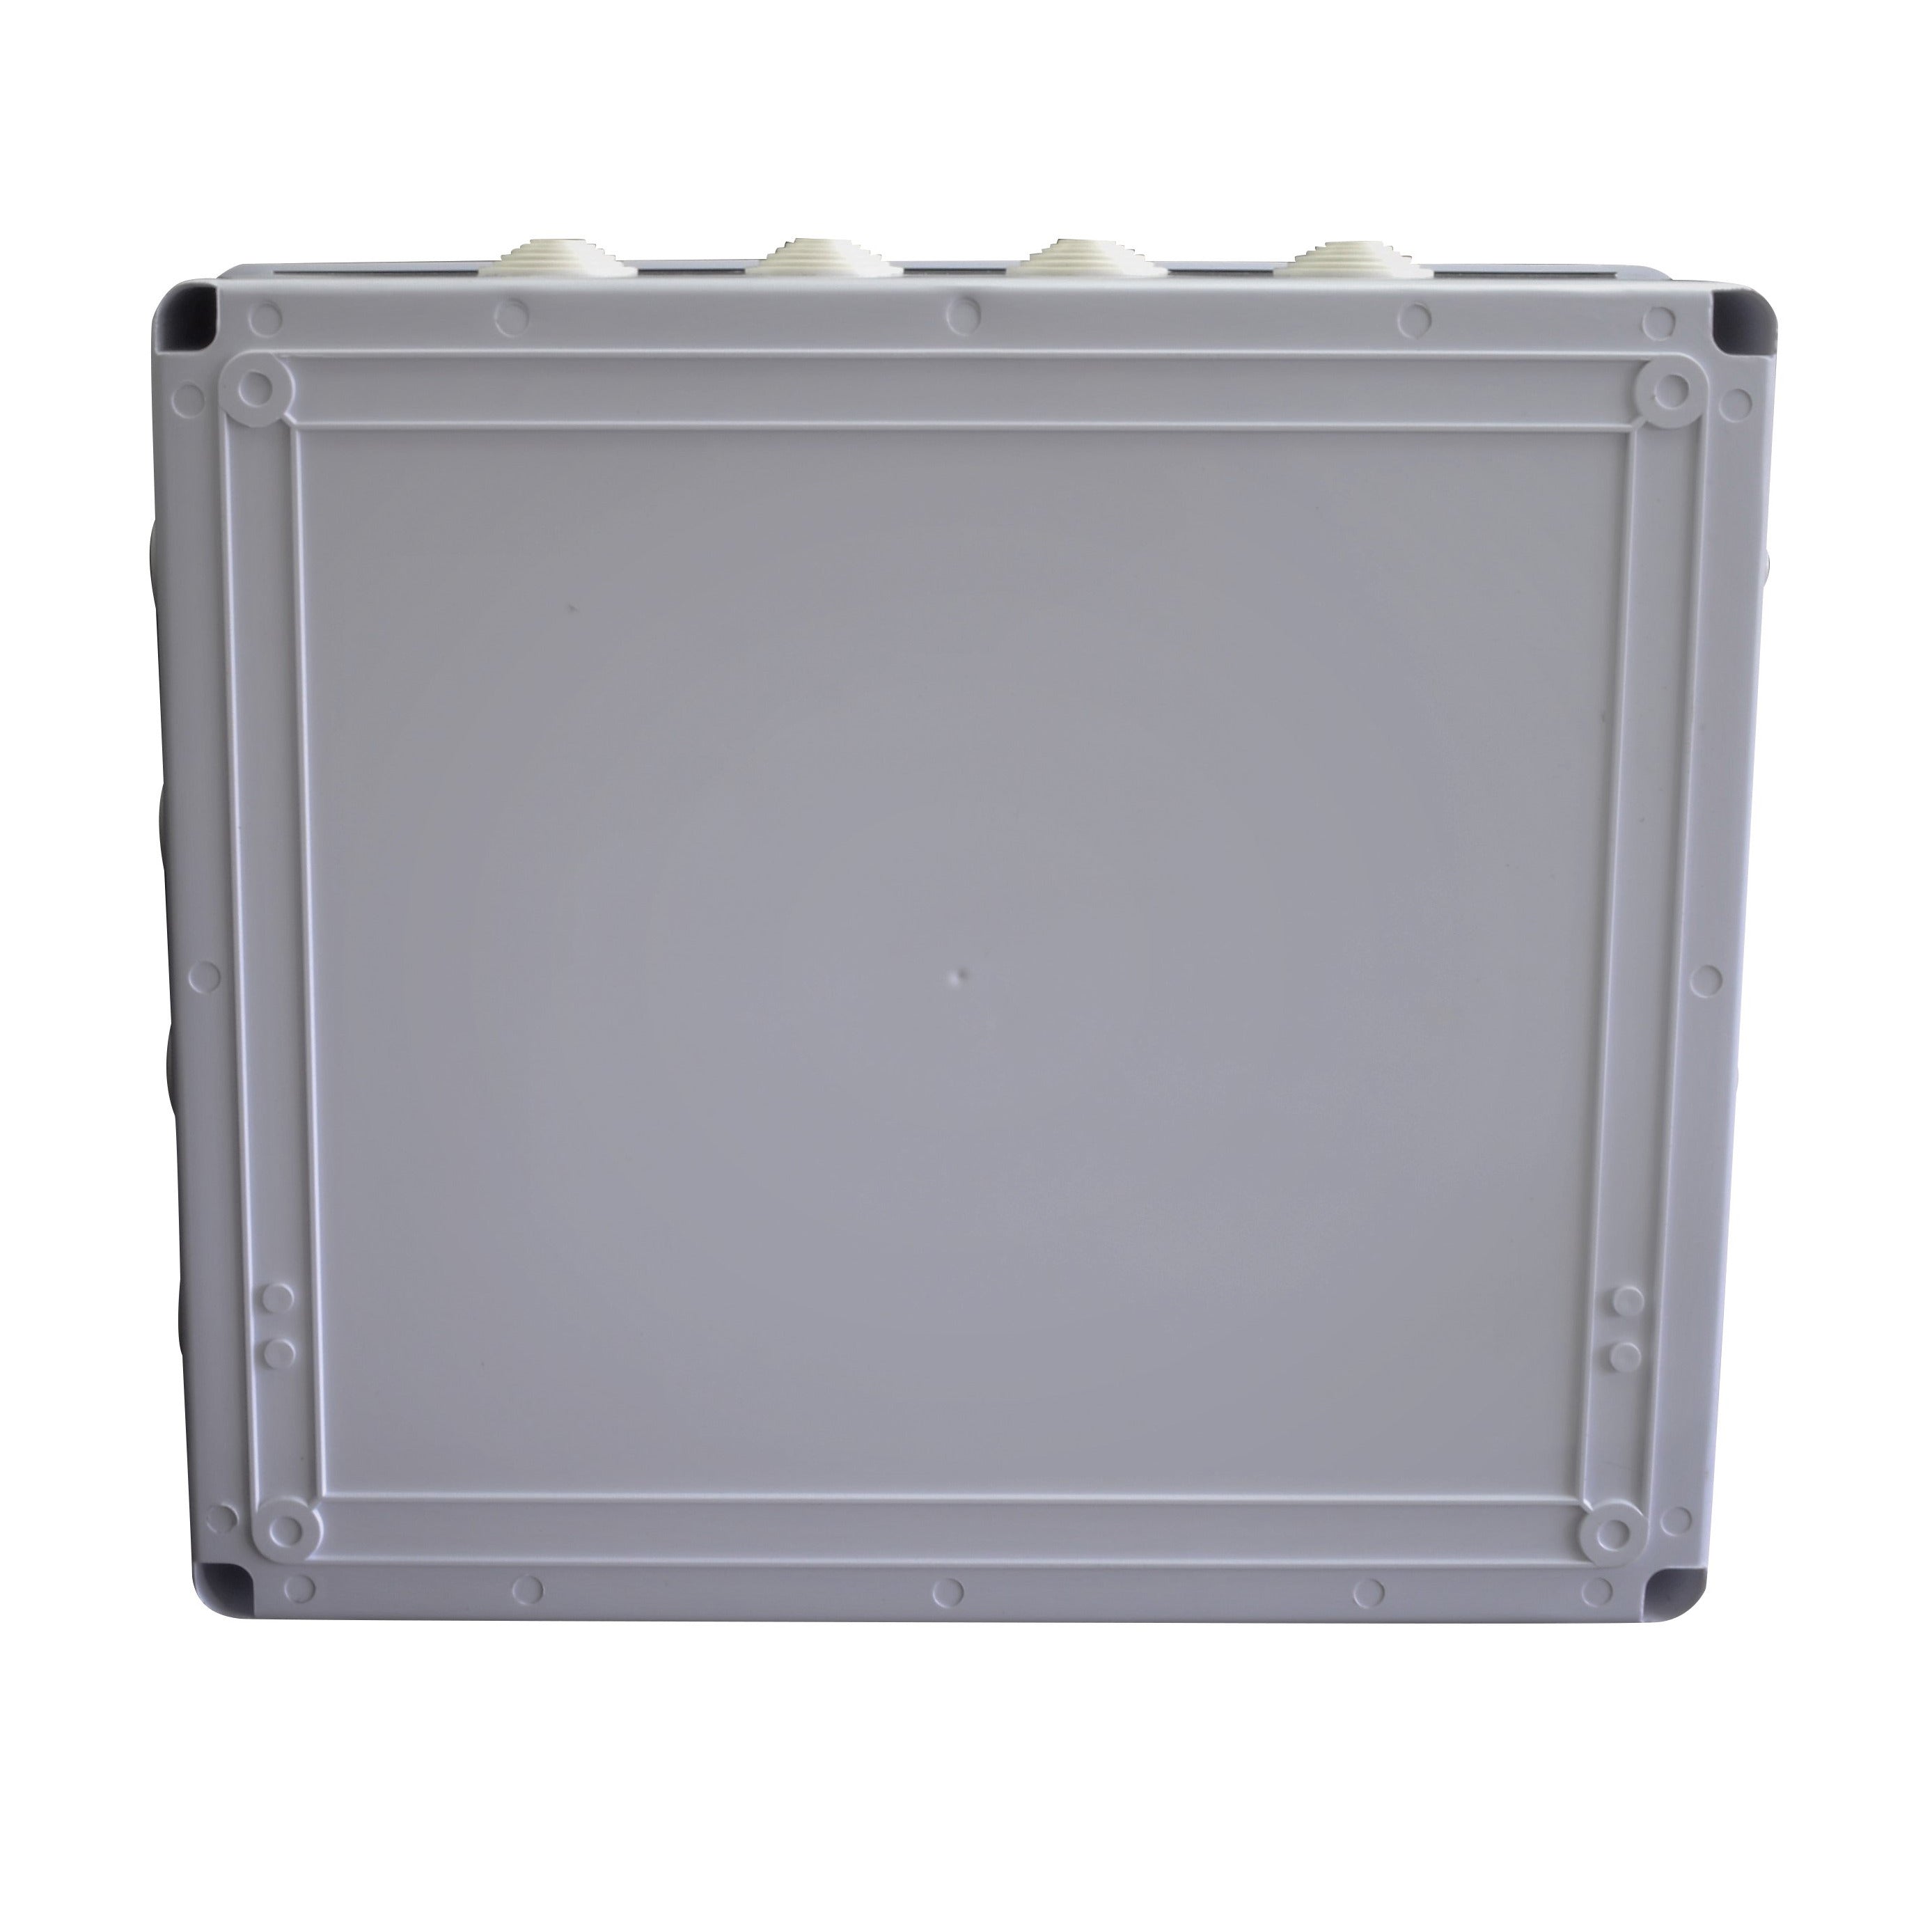 400x350x120 mm ABS Plastic IP65 Waterproof Junction Box